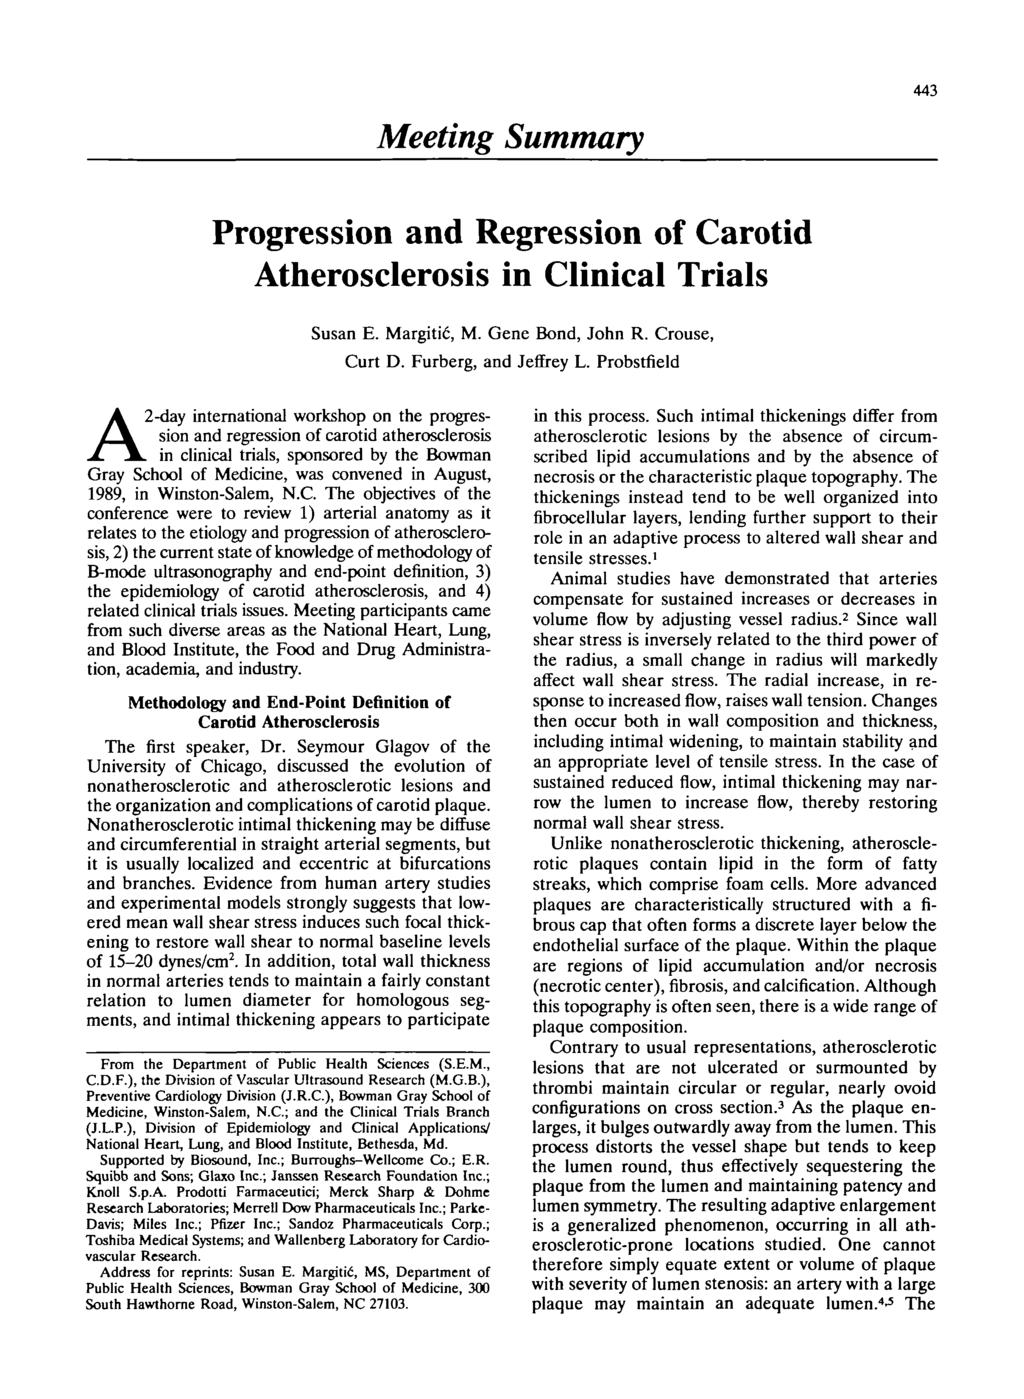 Meeting Summary 443 Progression and Regression of Carotid Atherosclerosis in Clinical Trials Susan E. Margitic, M. Gene Bond, John R. Crouse, Curt D. Furberg, and Jeffrey L.